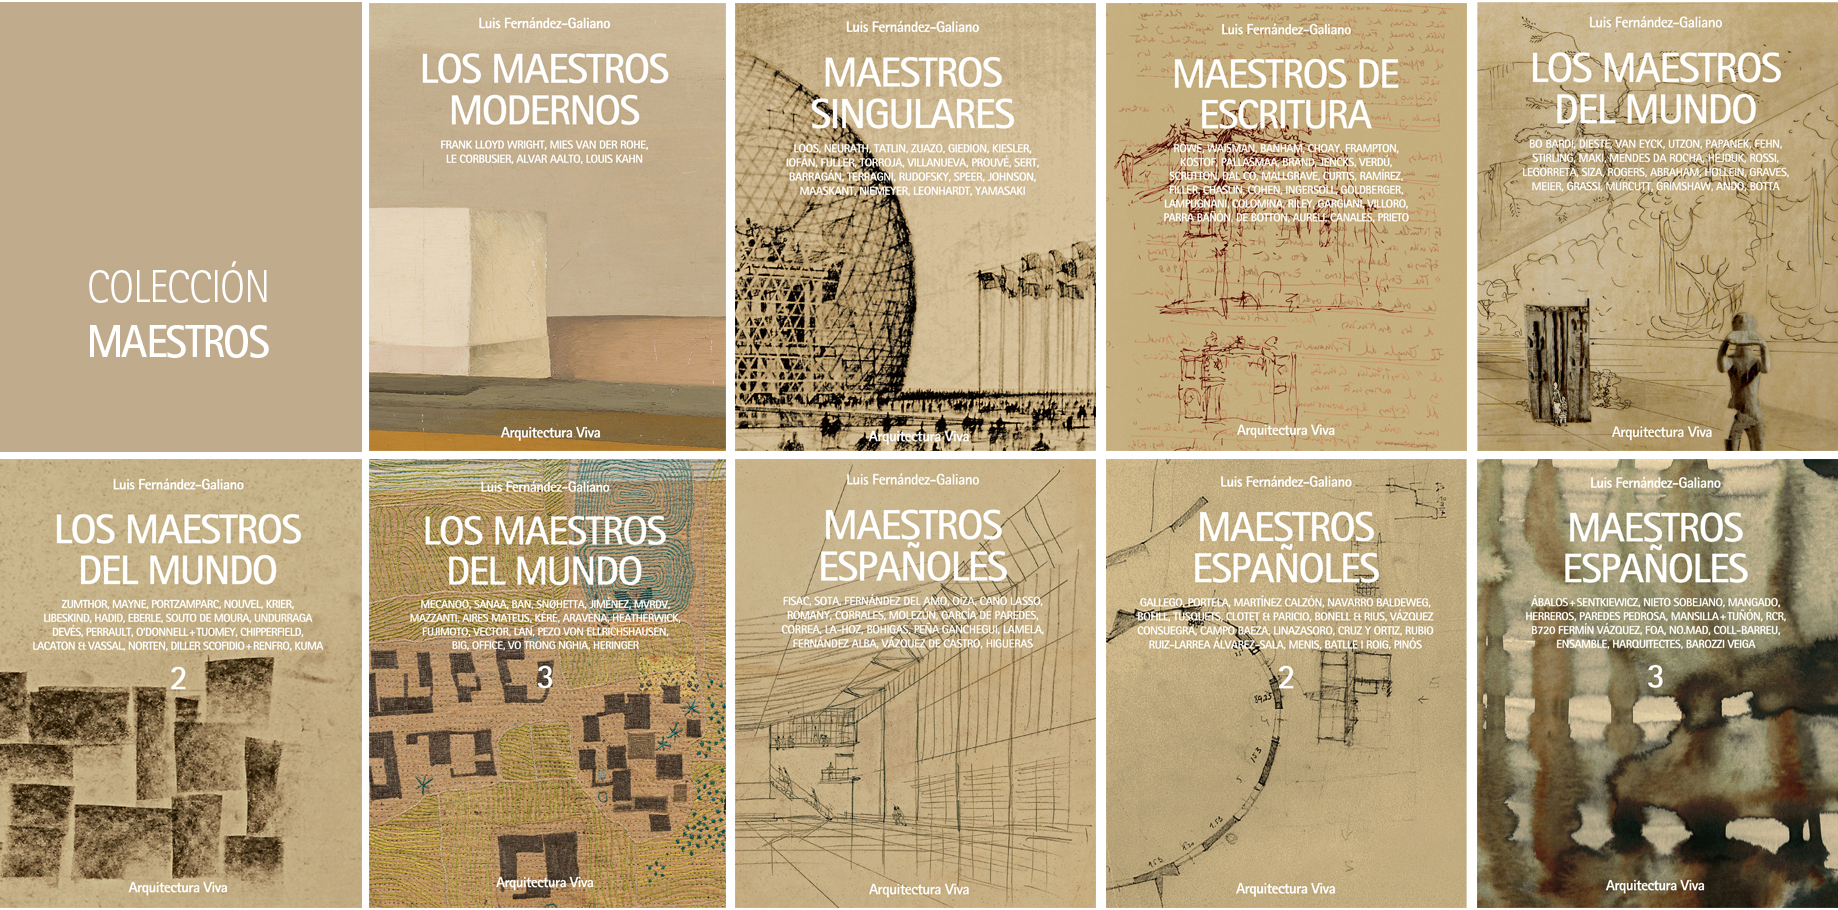 Special offer for ‘Maestros’ series: nine books for 50 euros